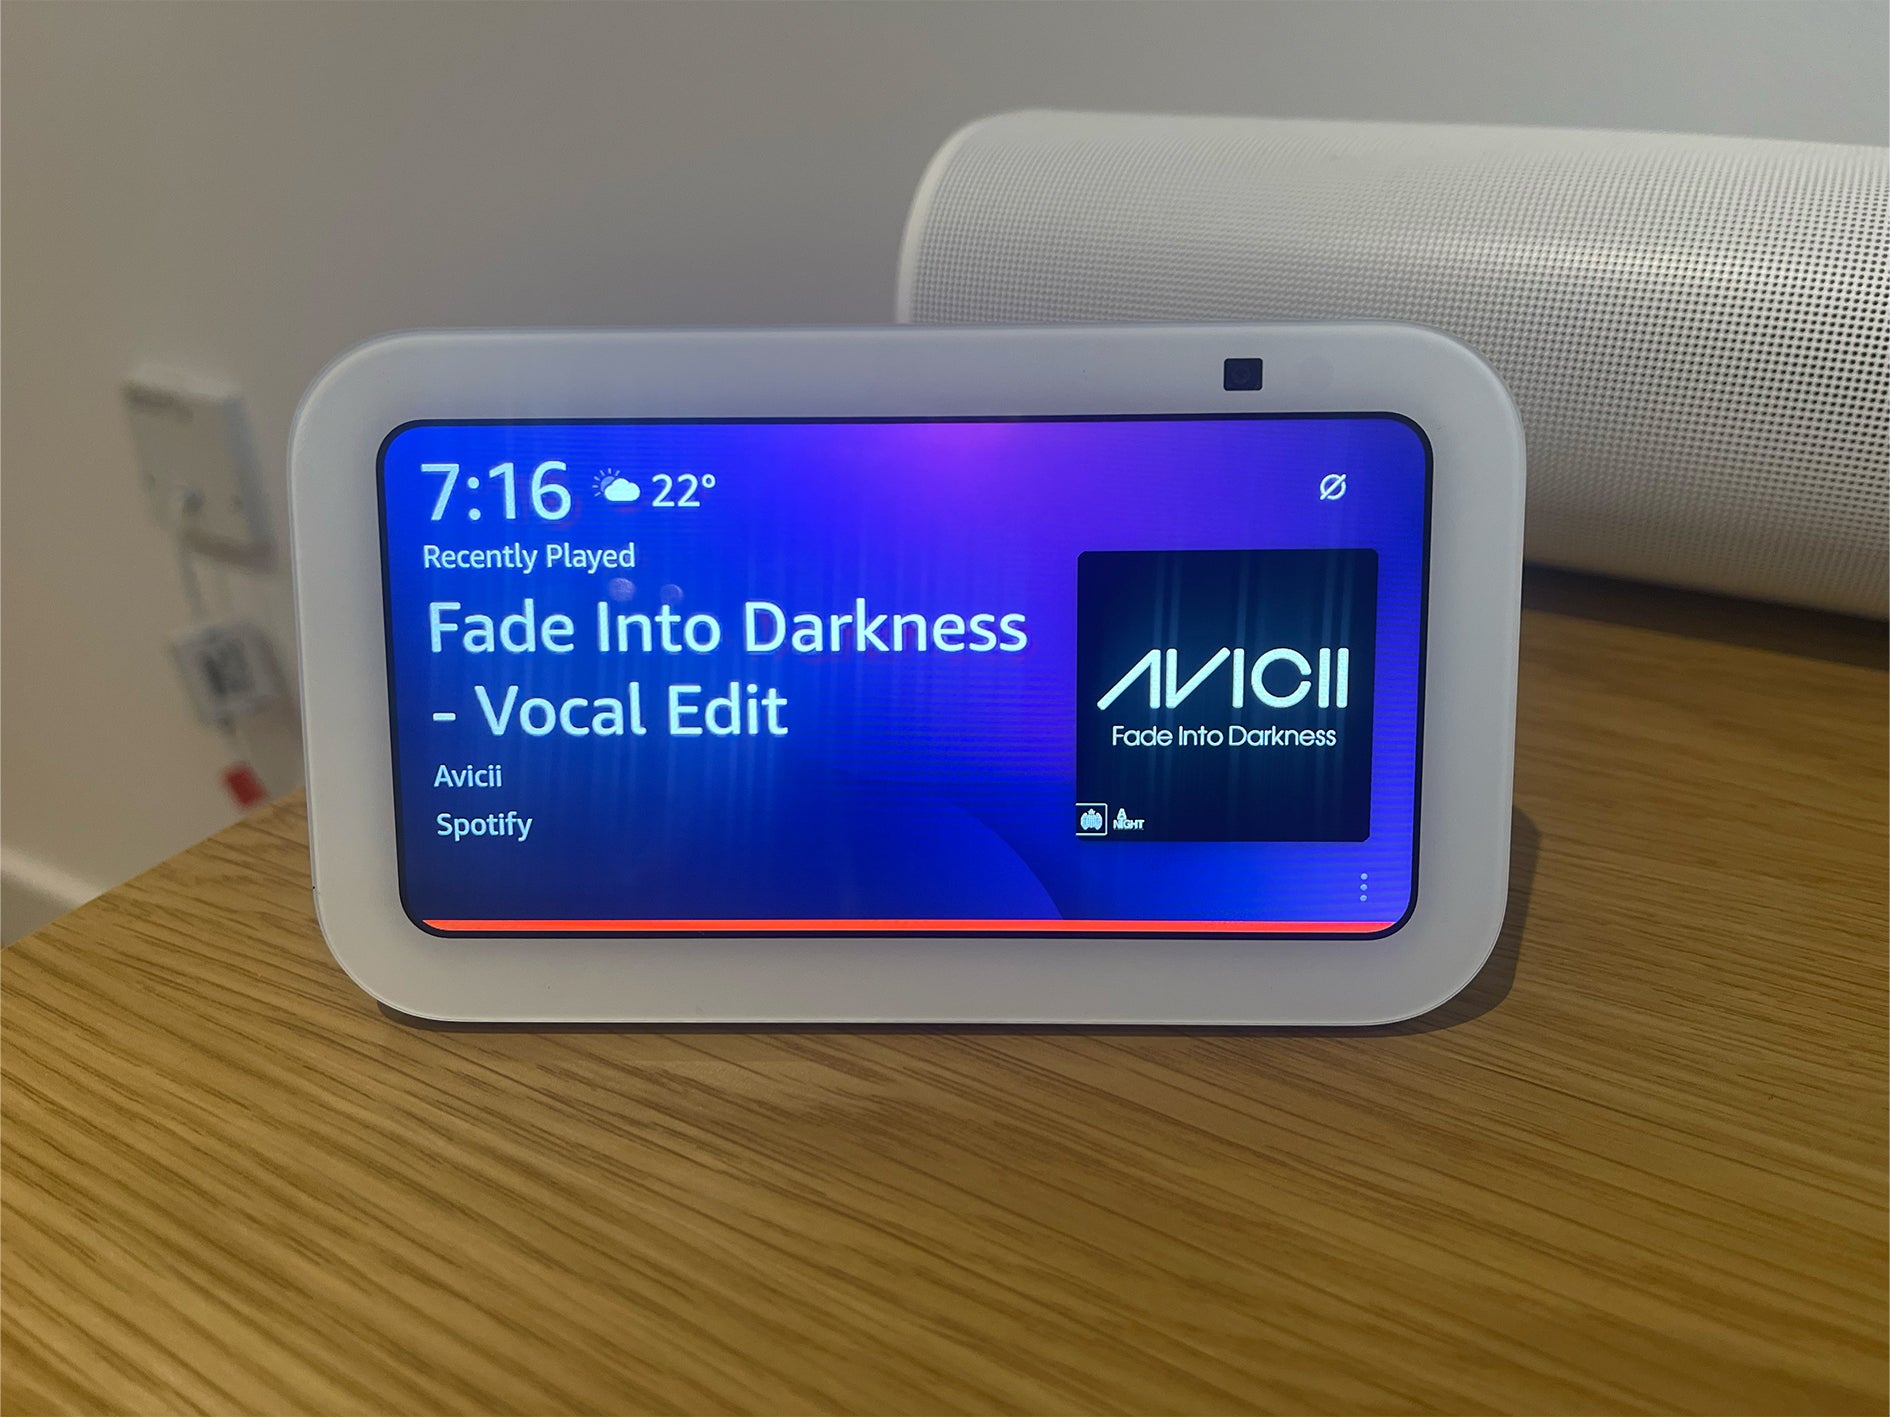 Echo Show 5 Vs. 8: Which Alexa Smart Display Should You Buy?